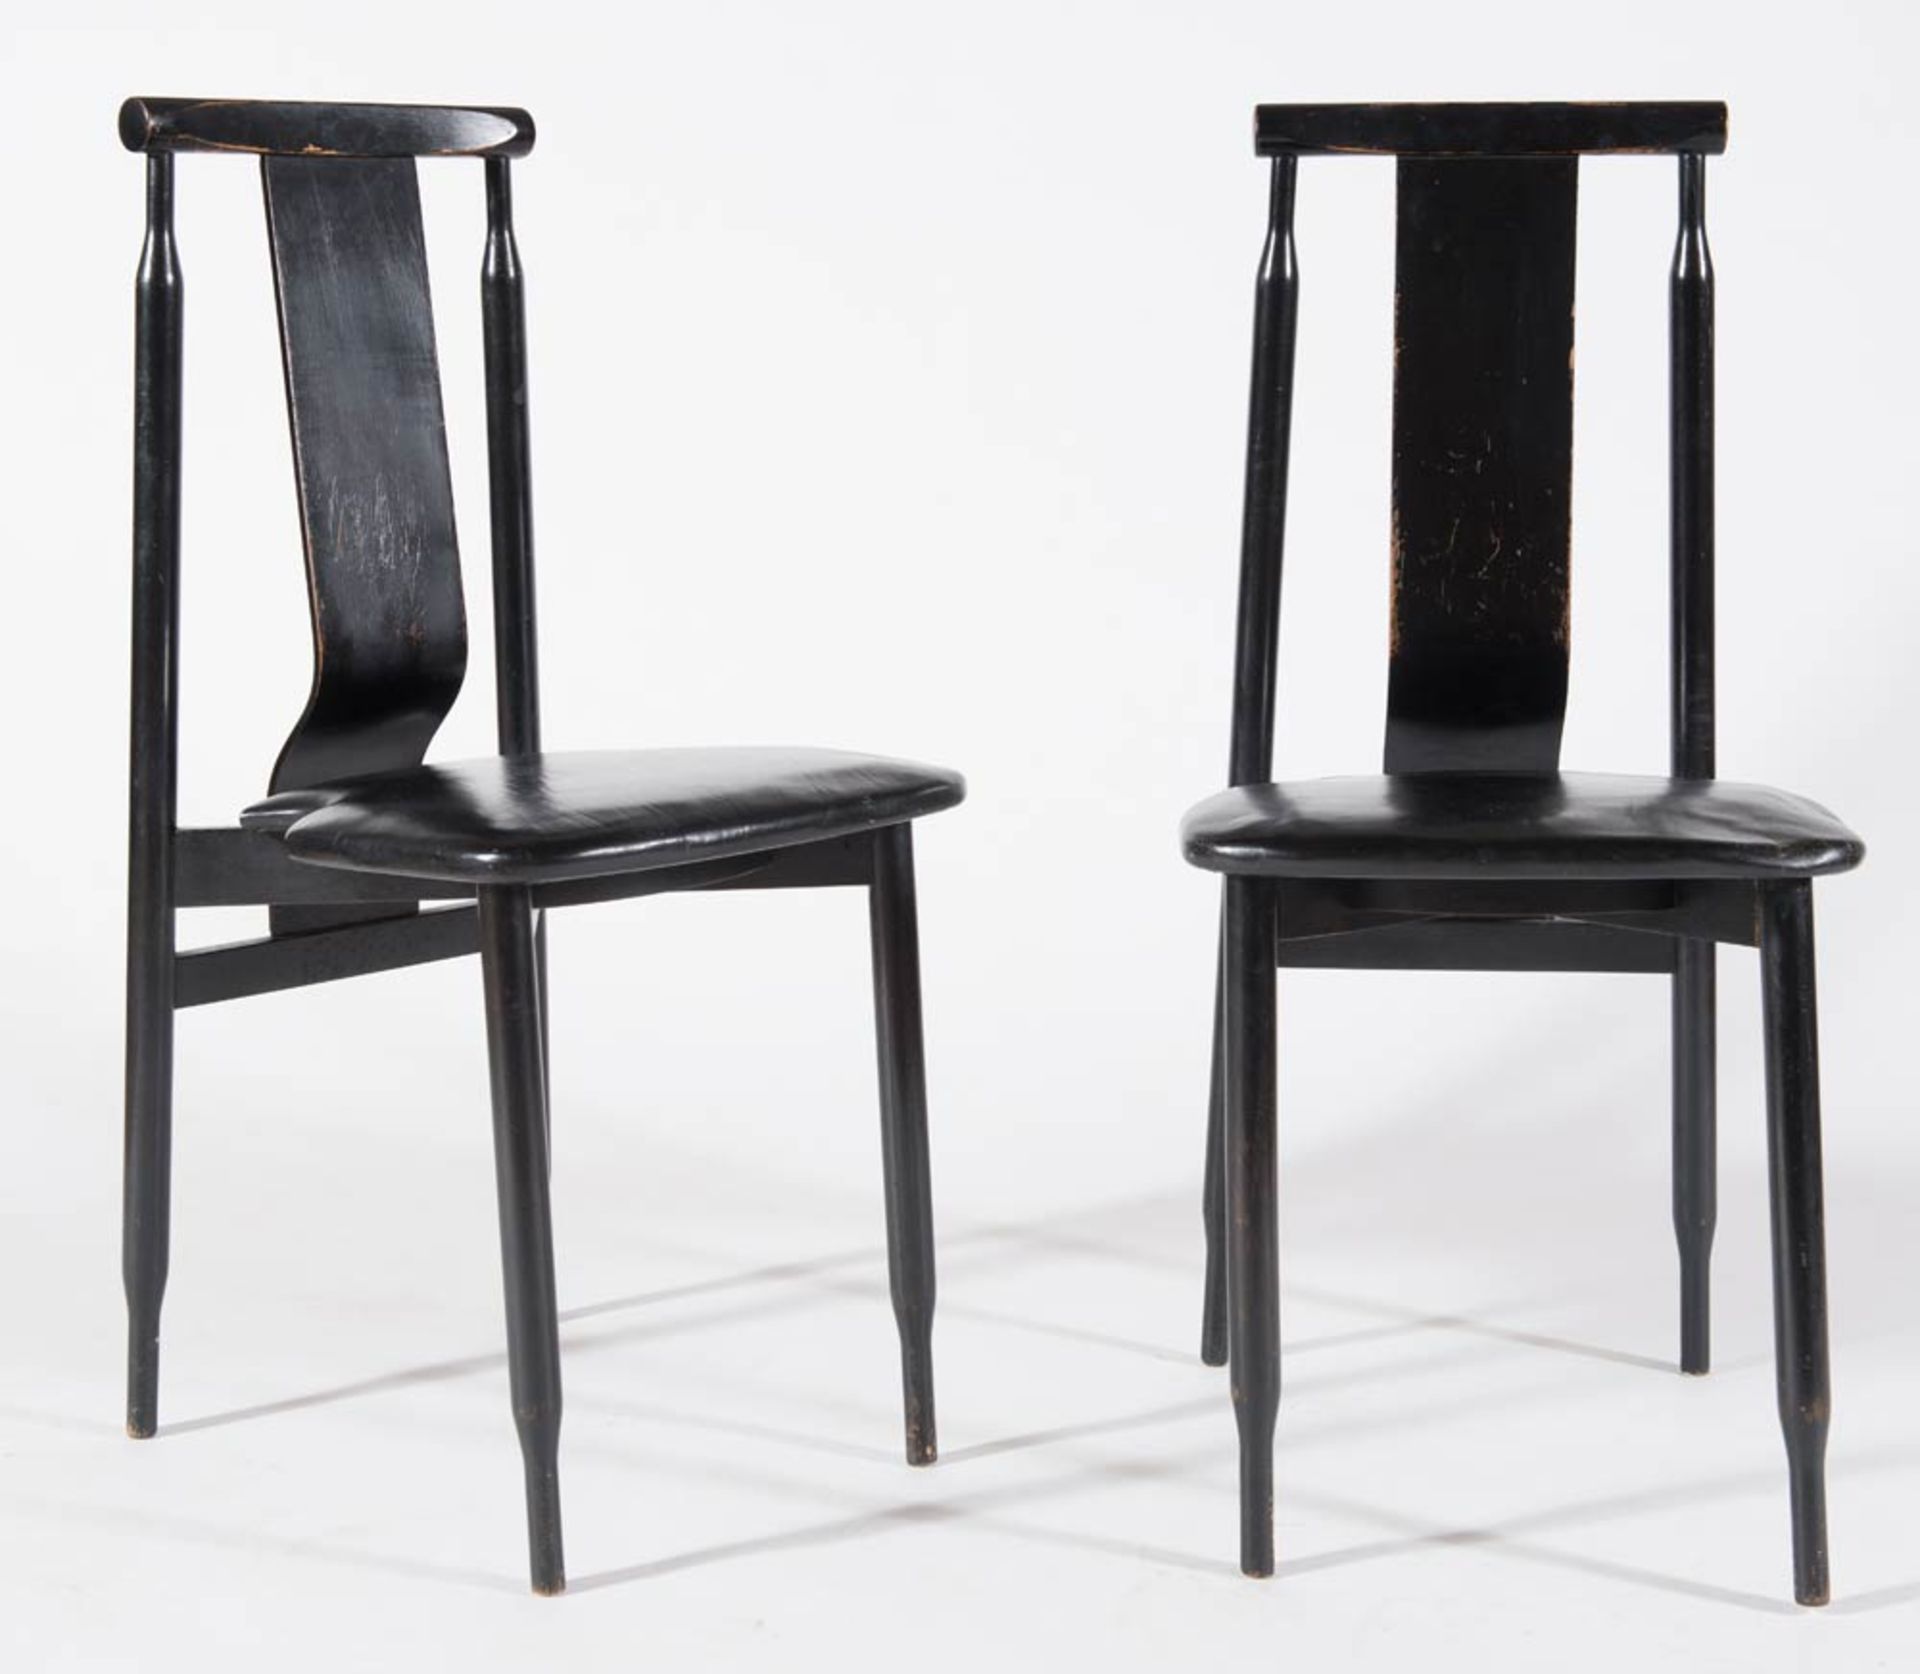 Achille e Piergiacomo Castiglioni, six chairs "Lierna", Gavina Edition, 1960 - Image 2 of 2